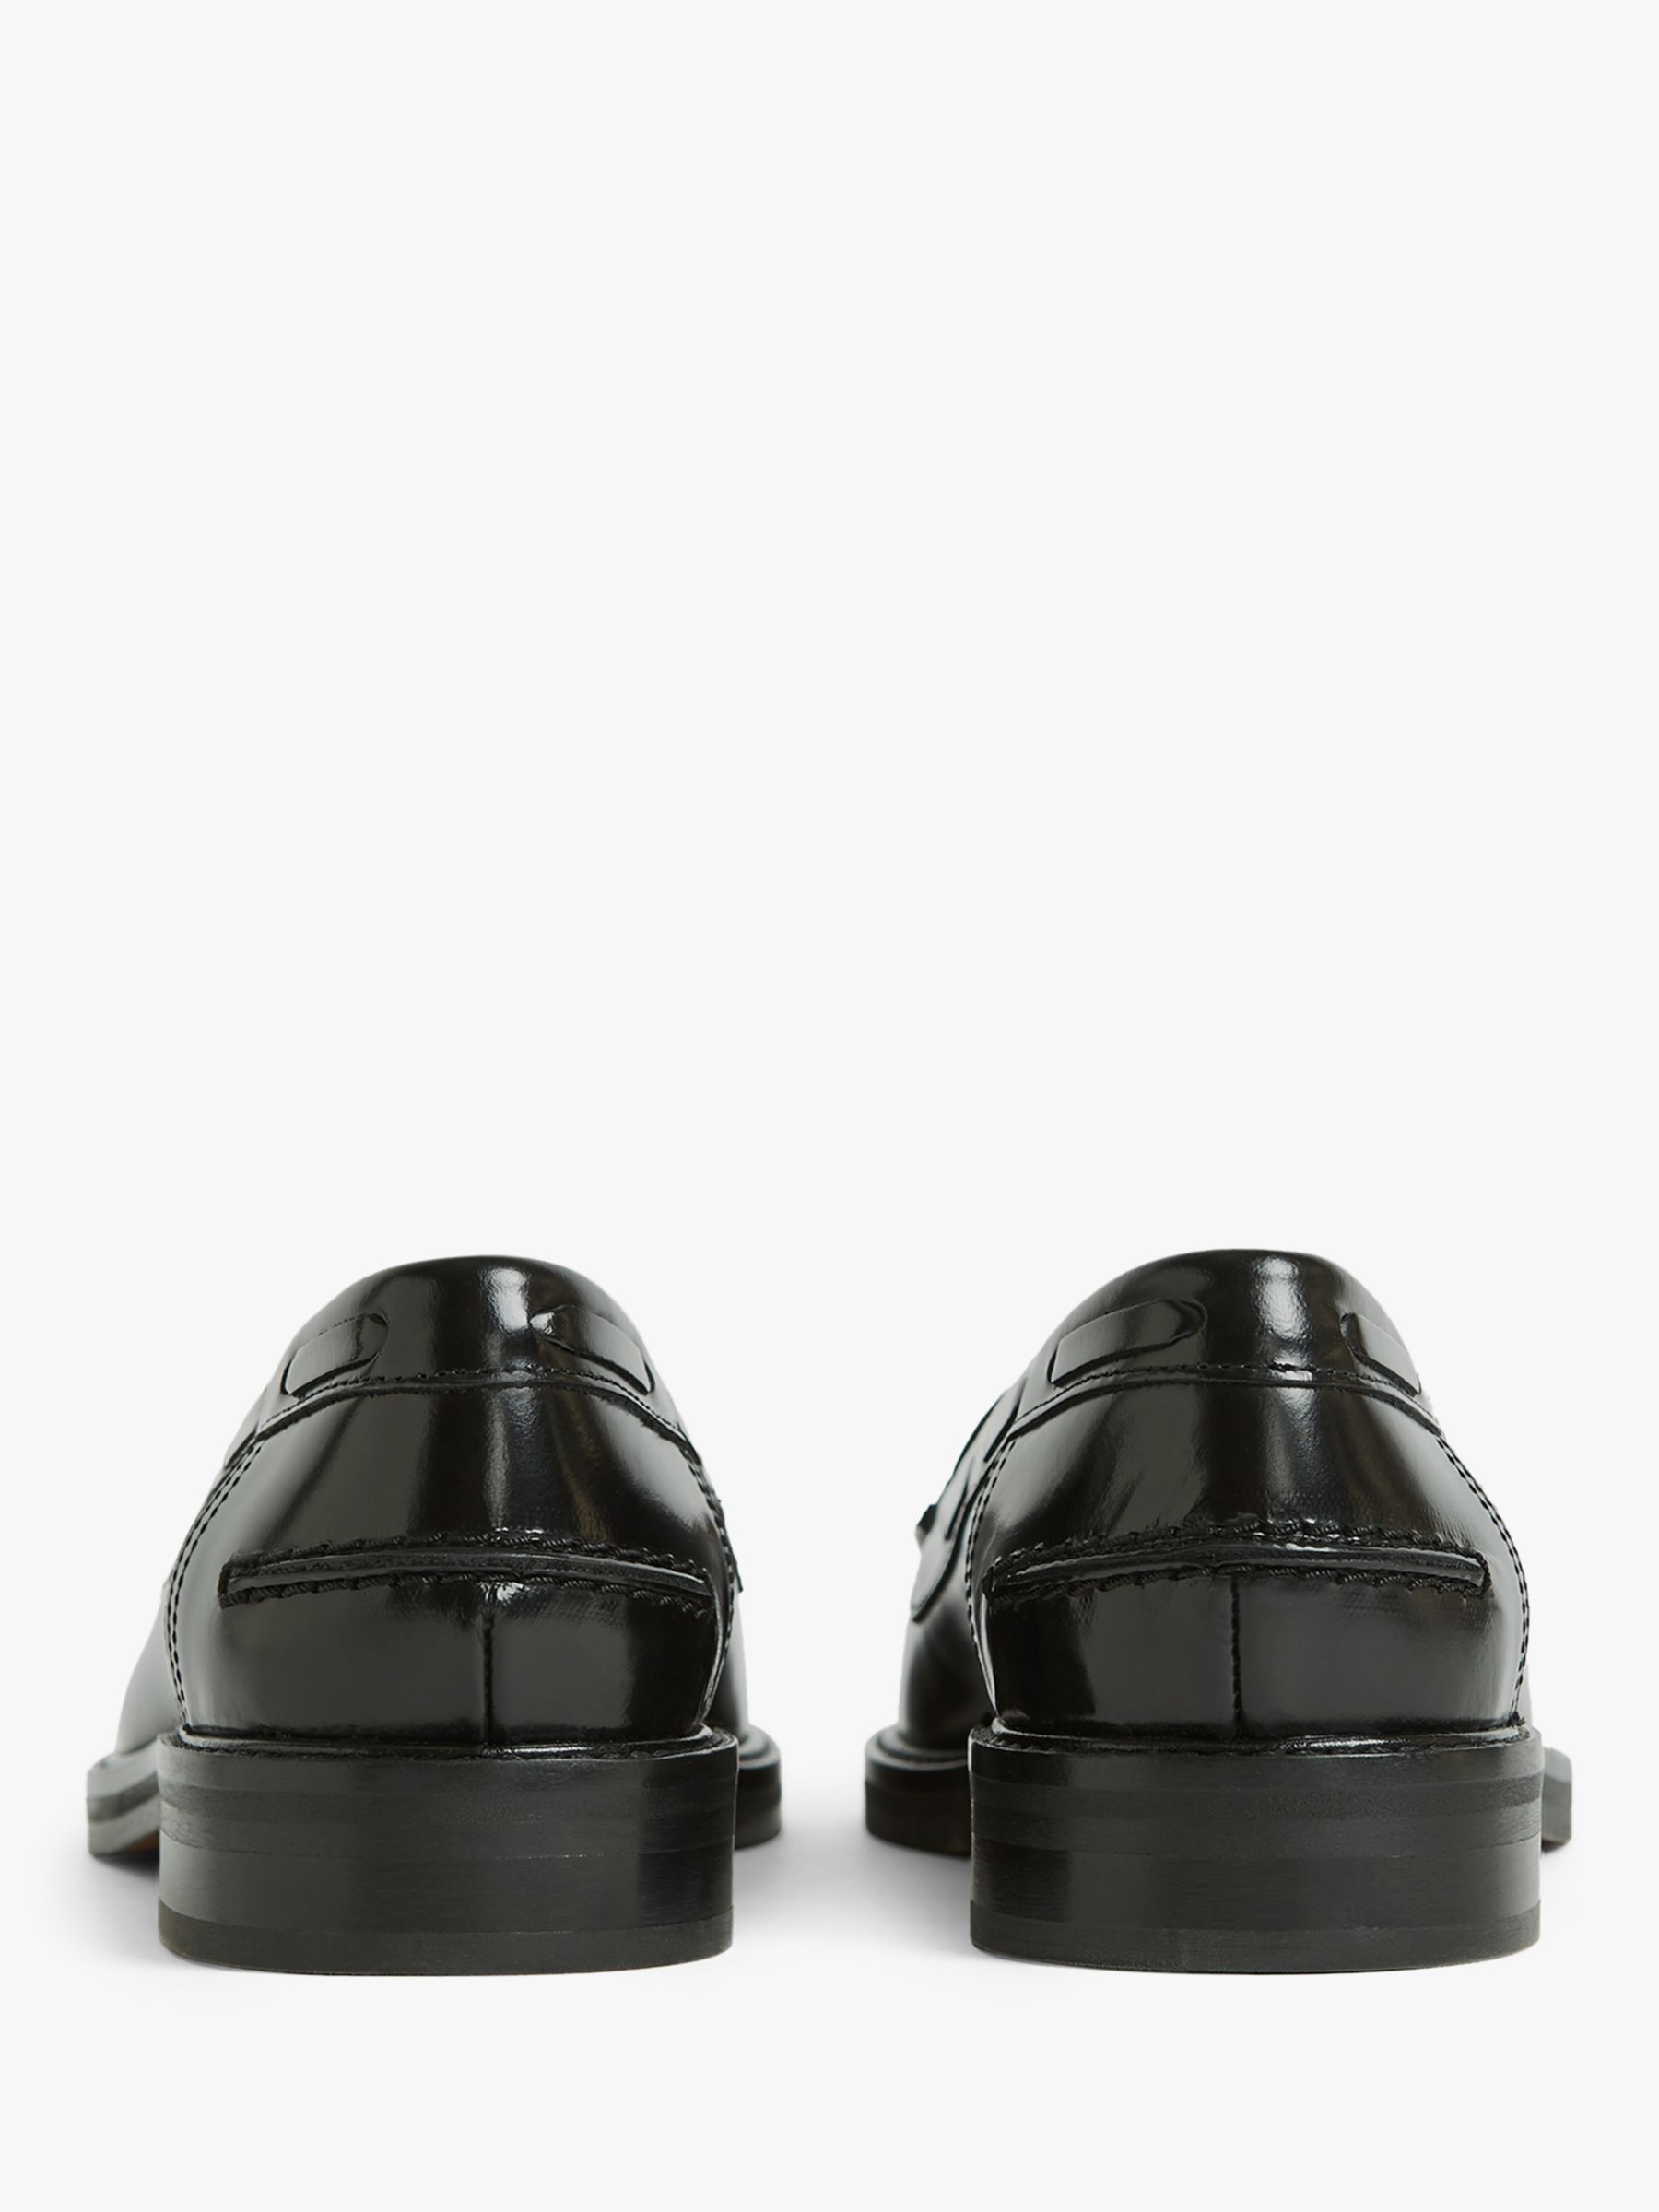 Reiss Farah Leather Tassel Loafers, Black